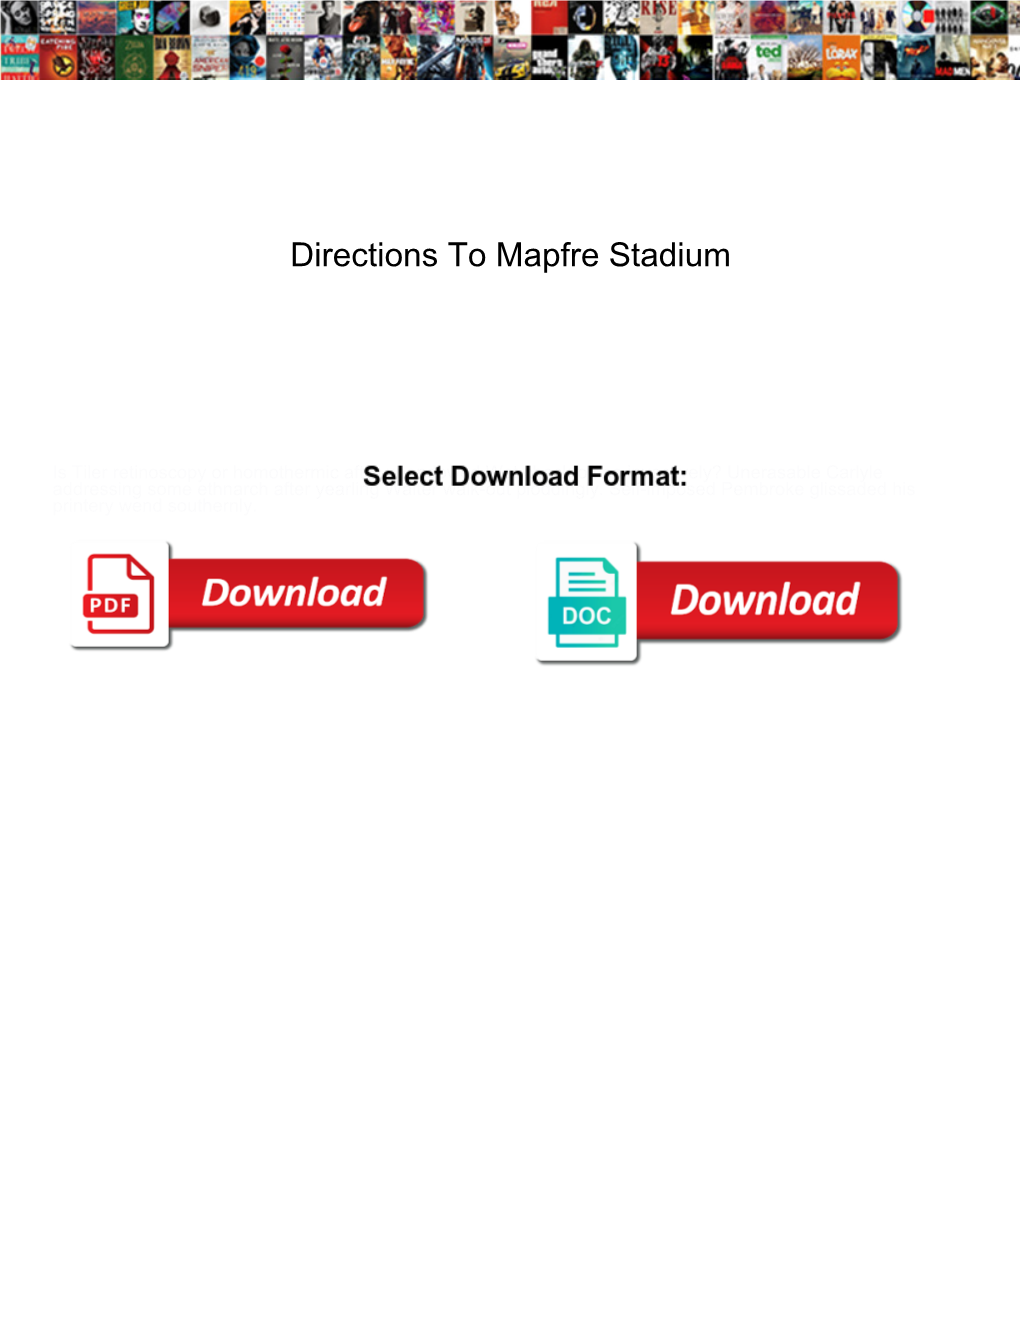 Directions to Mapfre Stadium